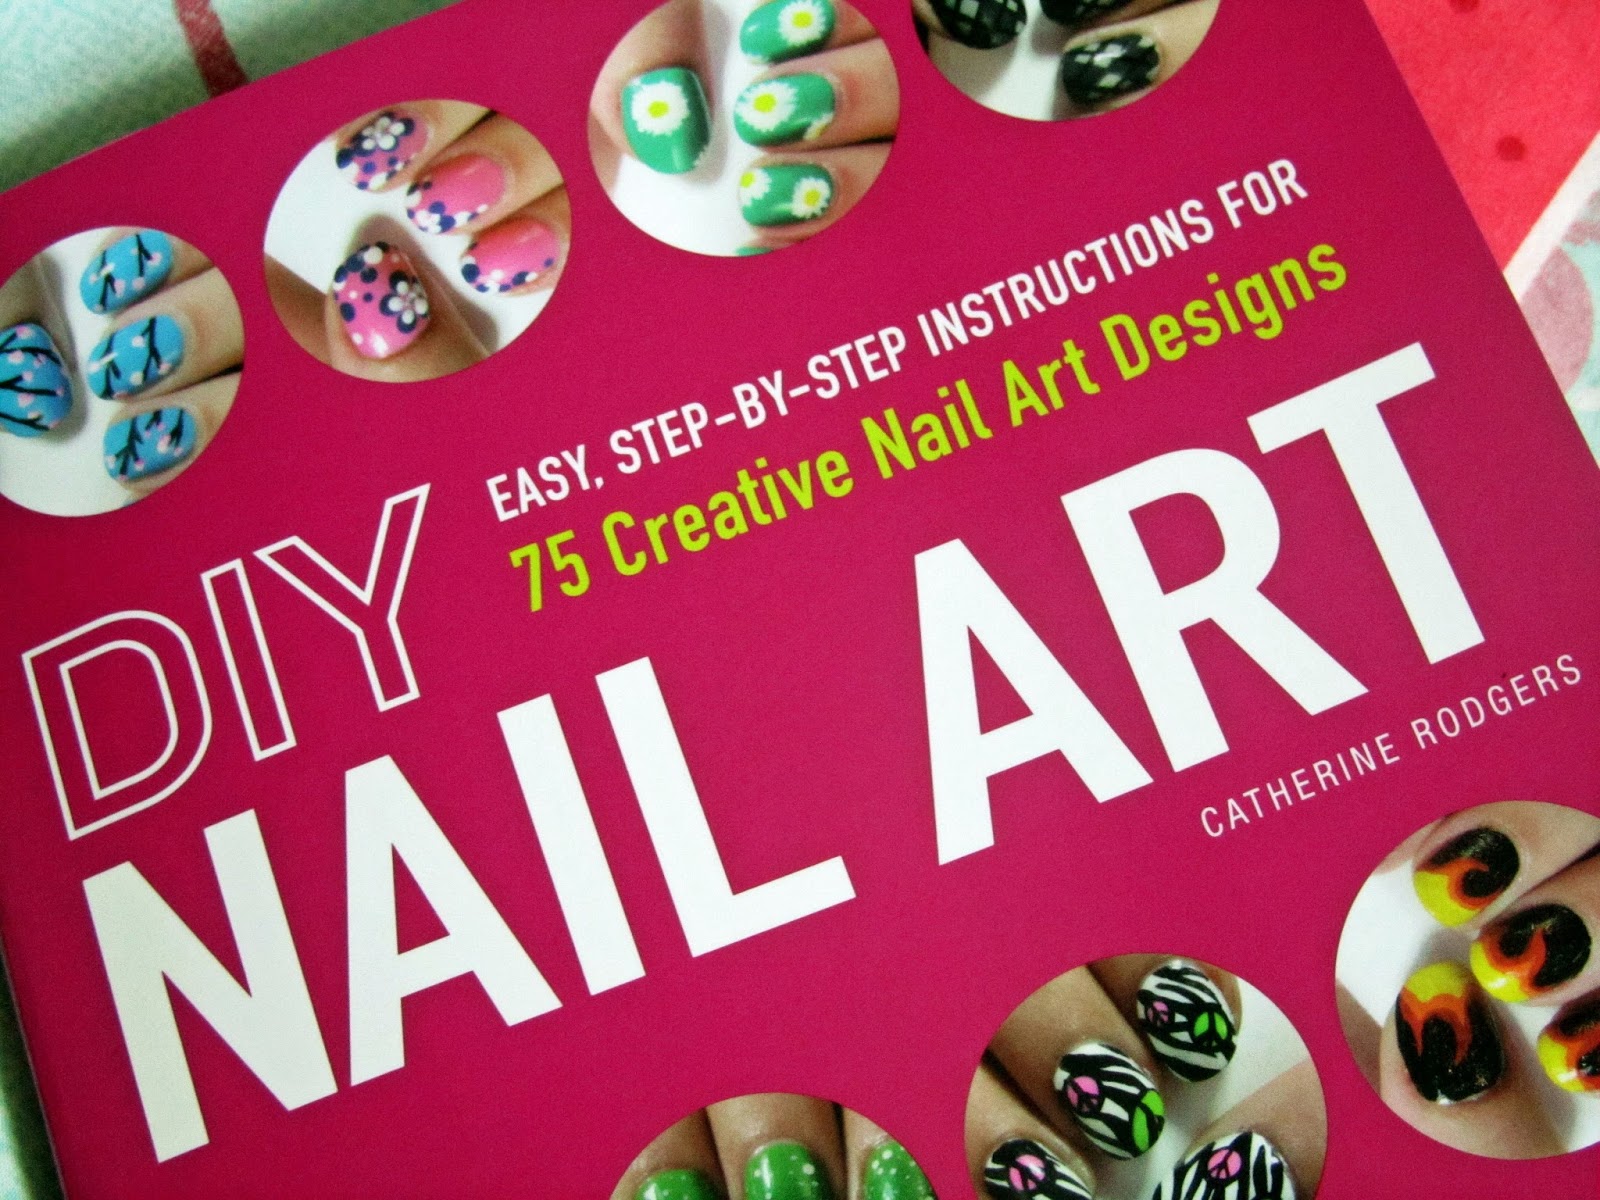 DIY Nail Art Book Review | Polka Spots and Freckle Dots